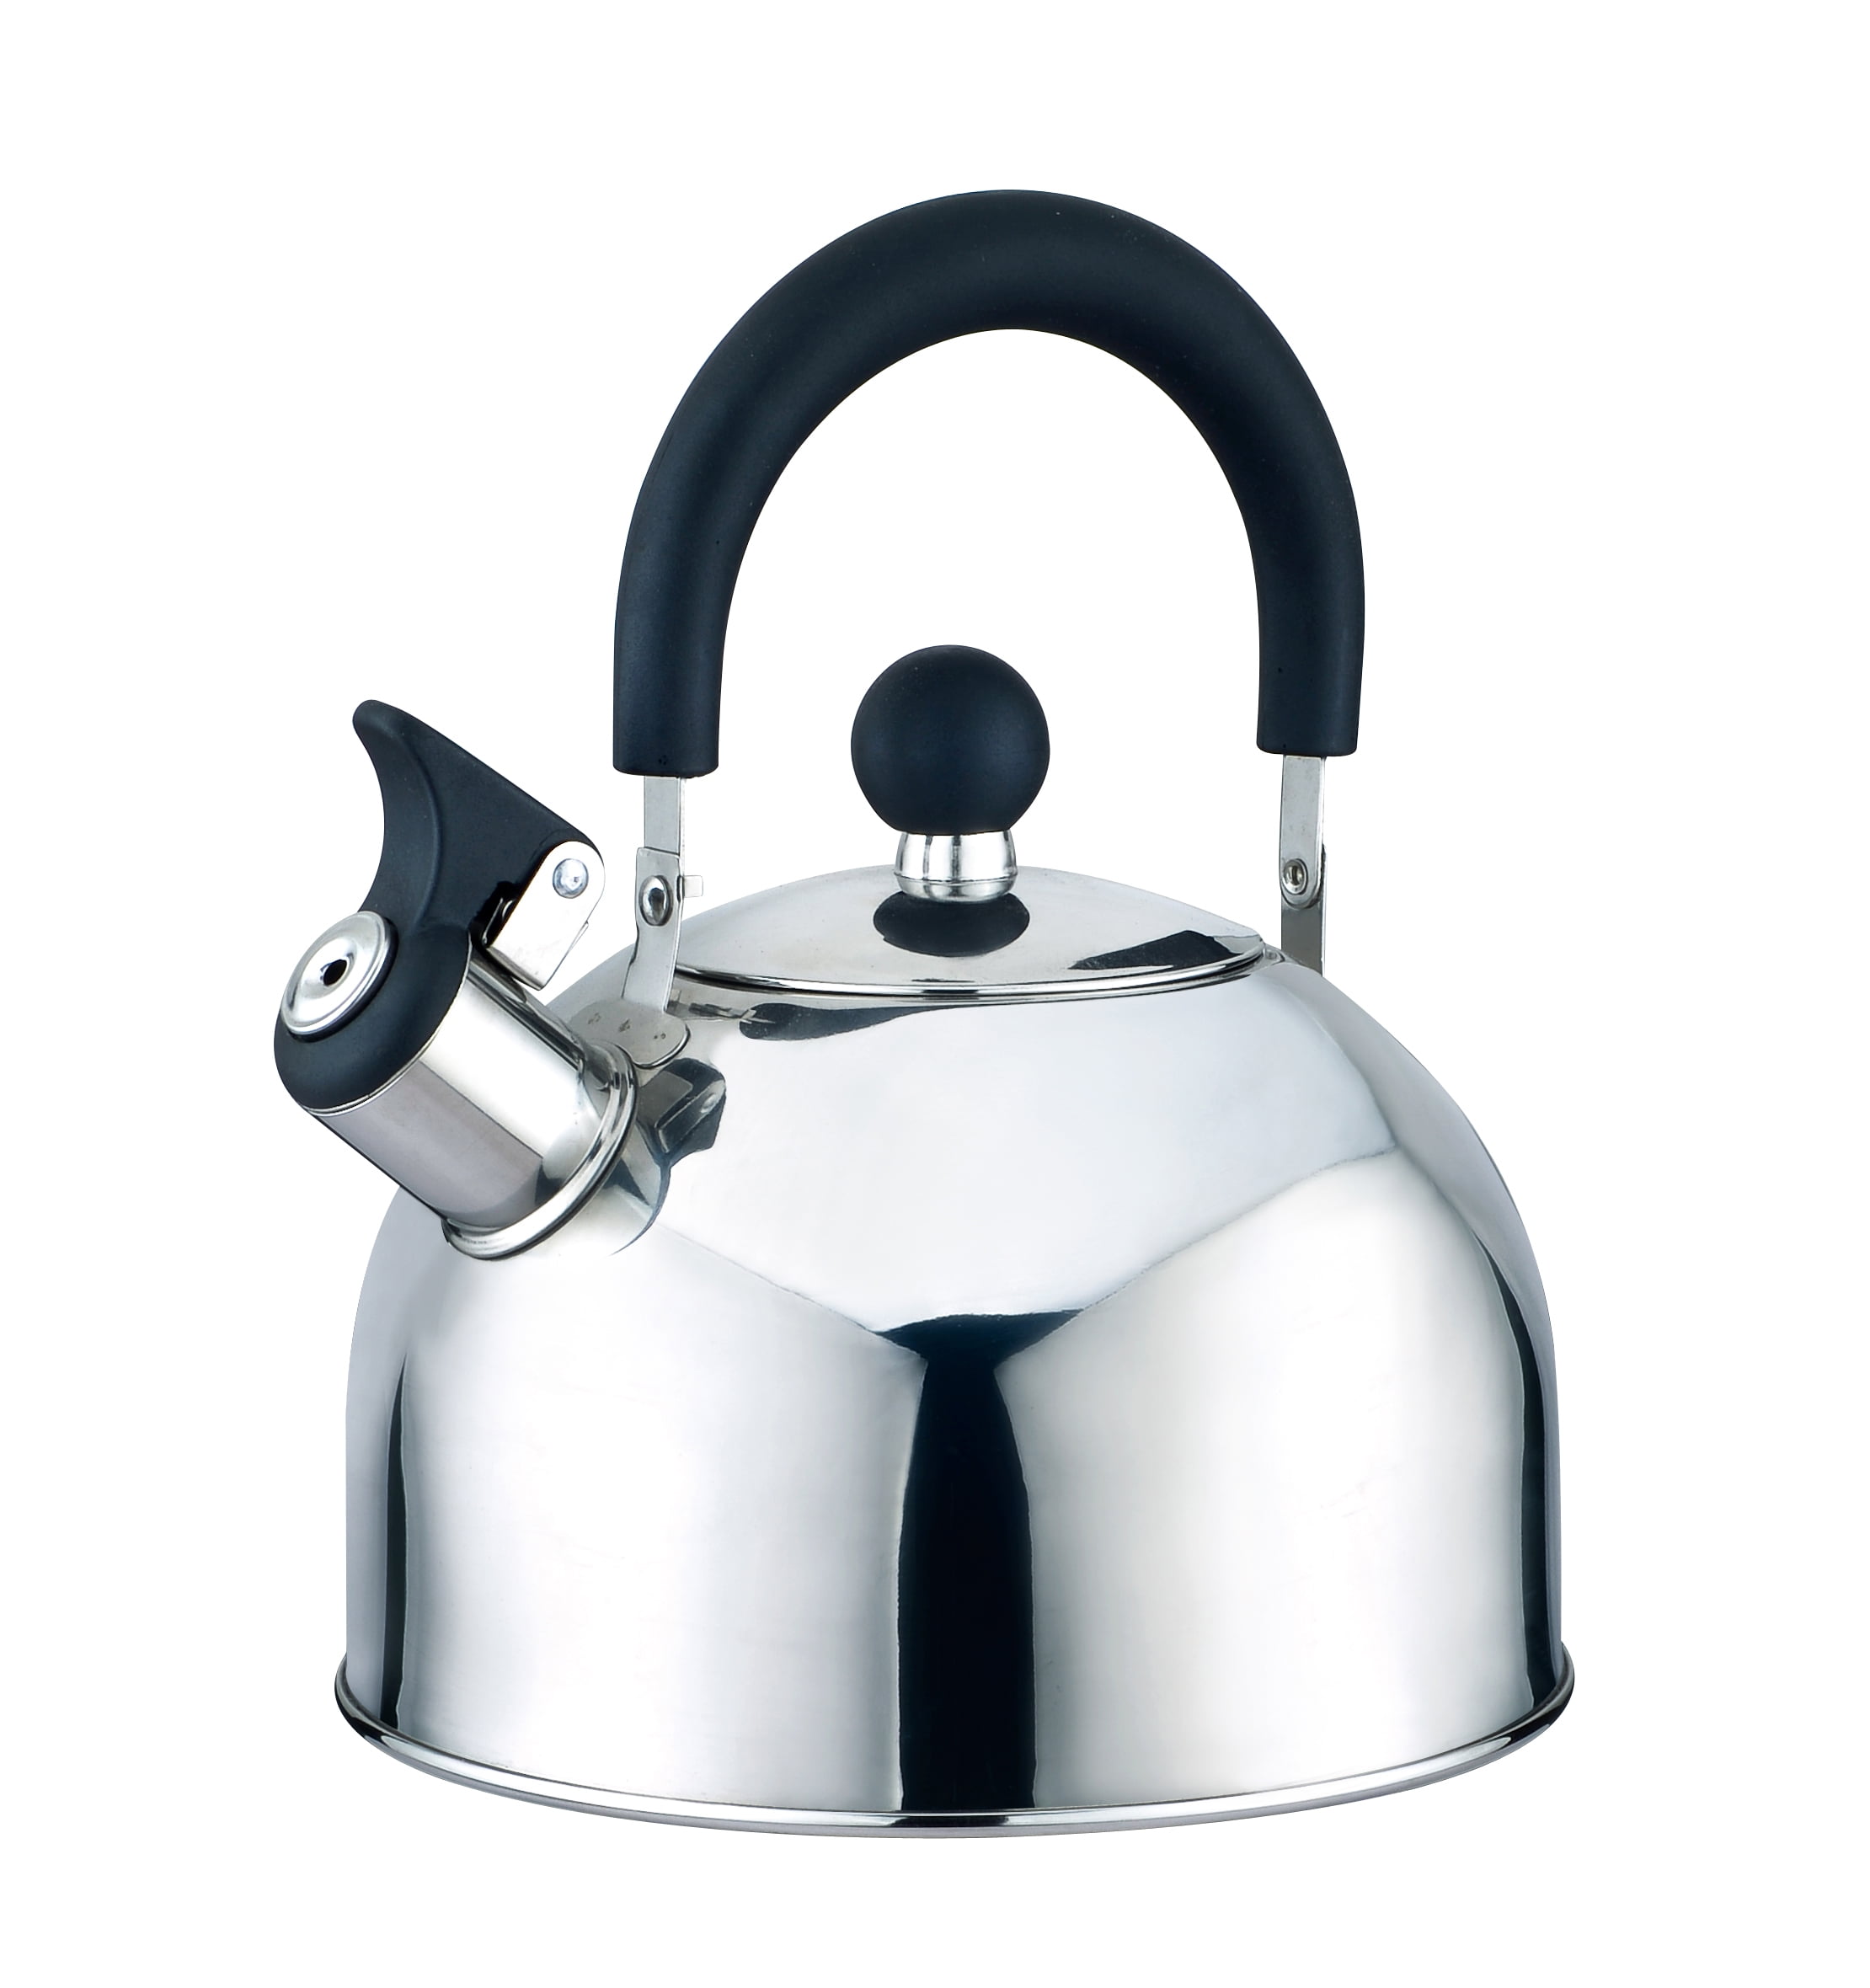 Whistling Tea Kettle Stainless Steel StoveTop Teapot Round Teakettle 1.5 Qt Gift 